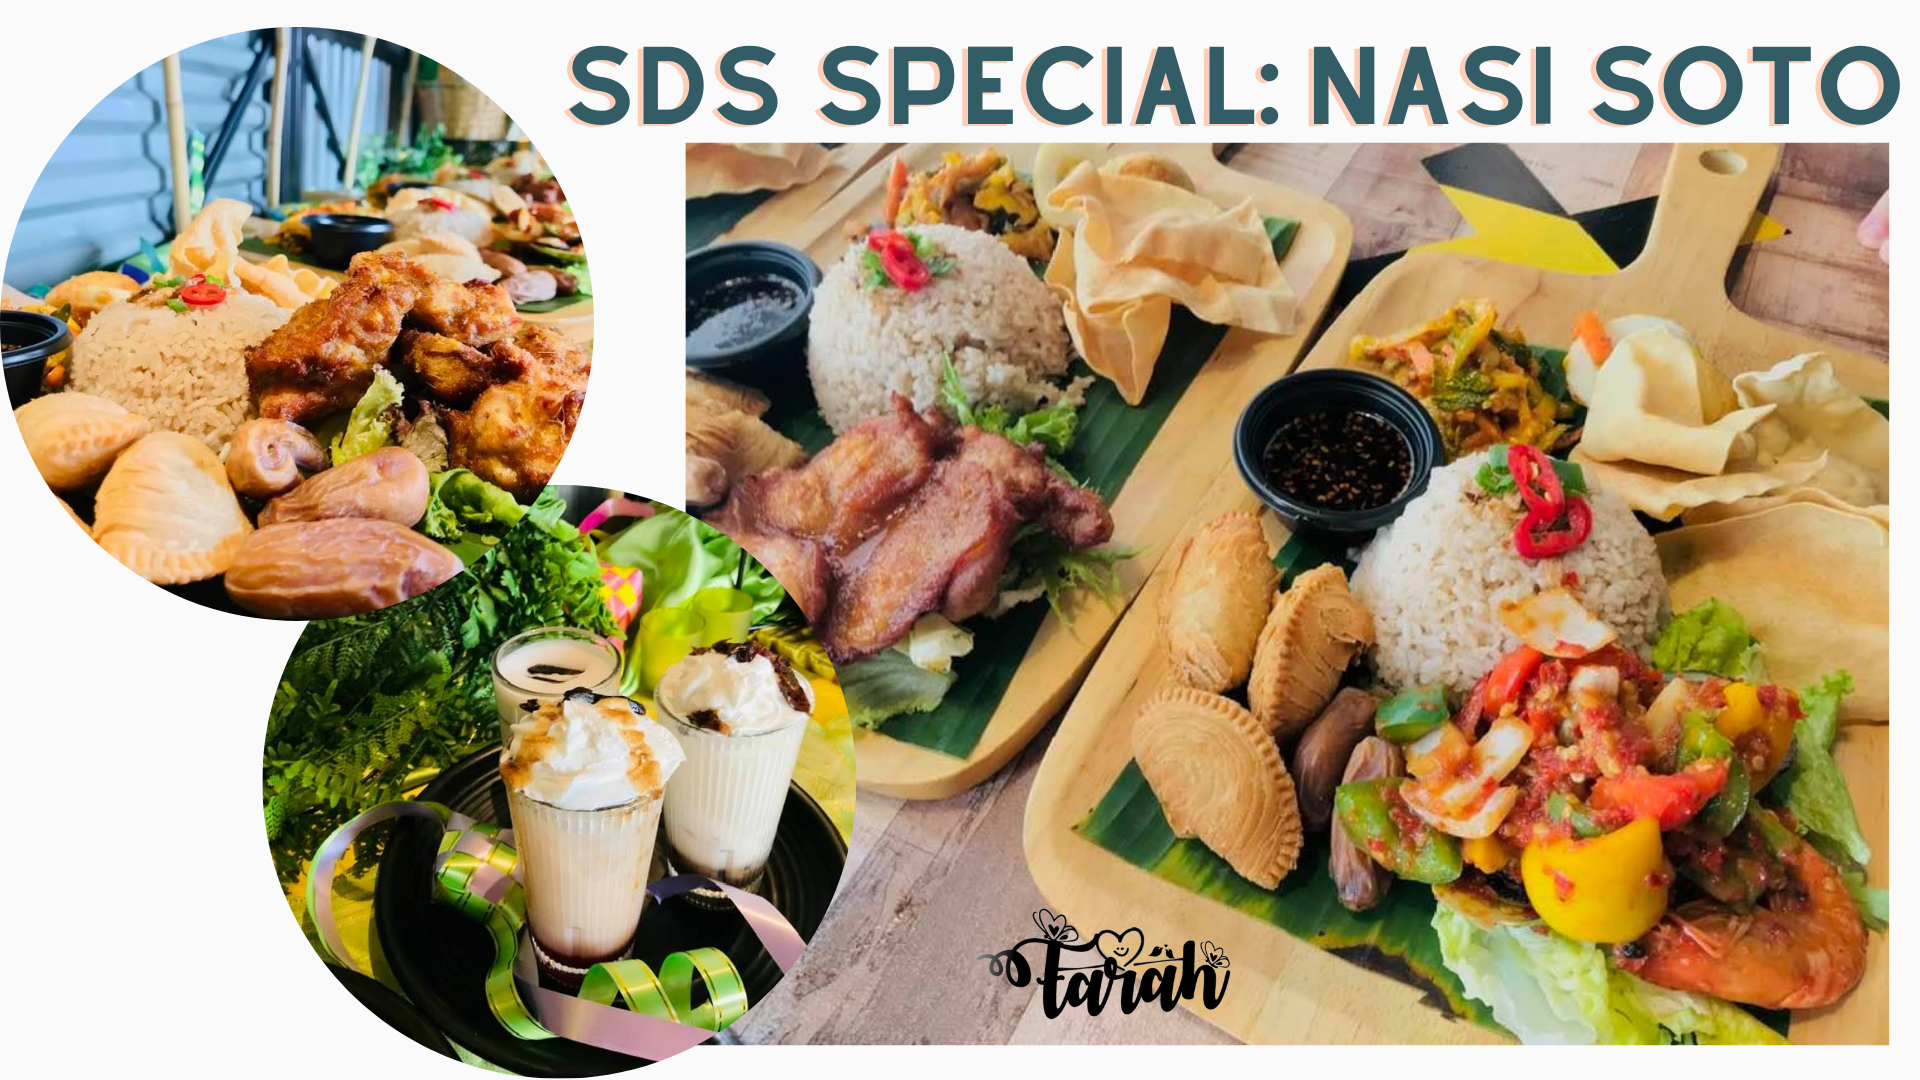 Special Nasi Soto SDS - Ramadhan Raya Promo